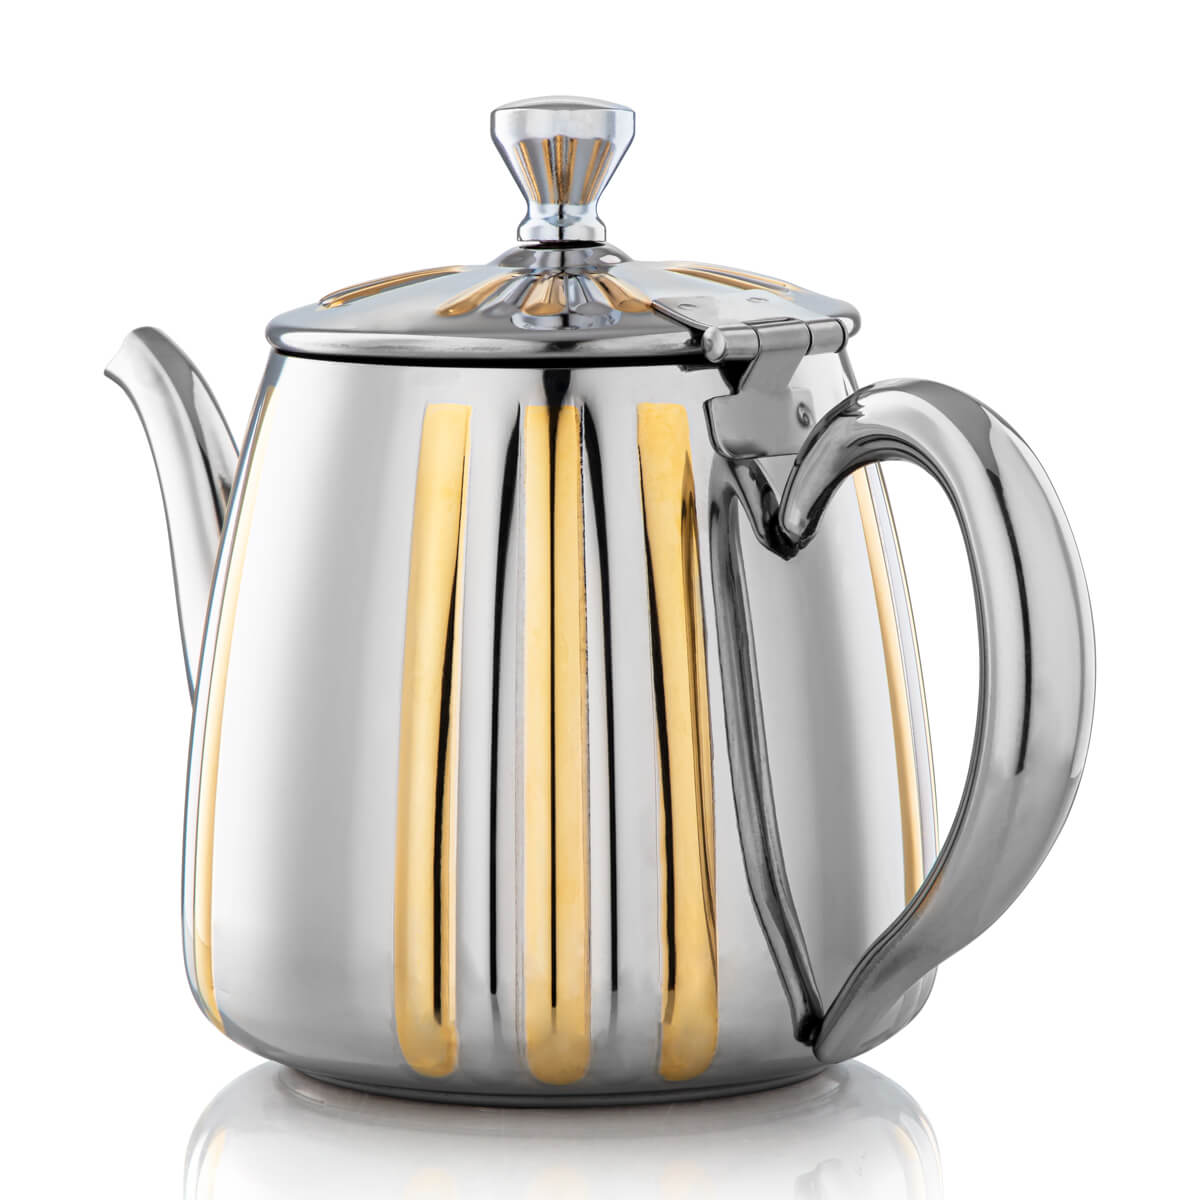 Almarjan 0.75 Liter Stainless Steel Teapot Silver & Gold - STS0010642
